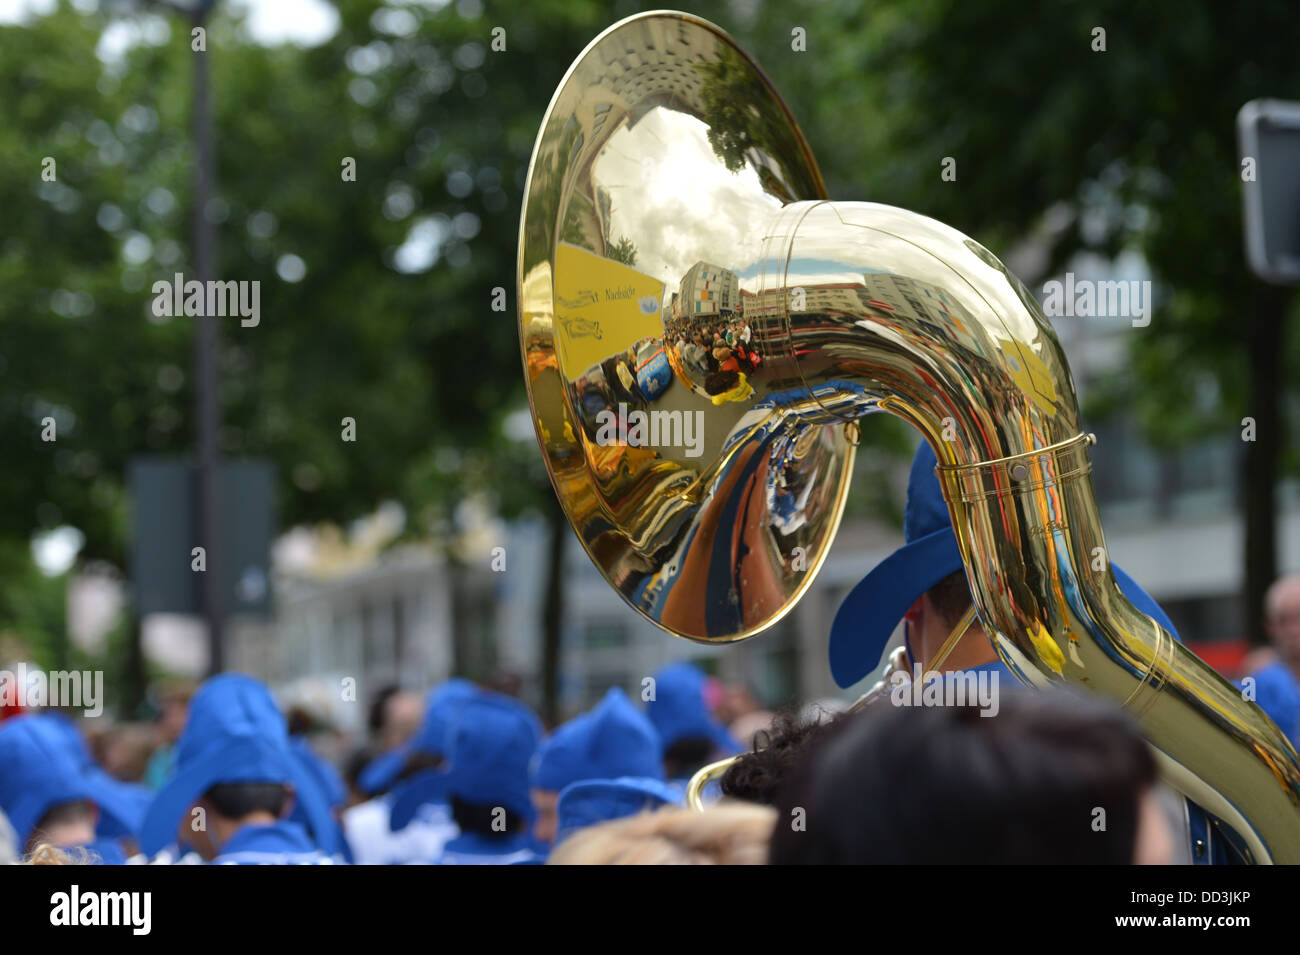 https://c8.alamy.com/comp/DD3JKP/brass-trombone-with-reflection-of-carnival-parade-DD3JKP.jpg